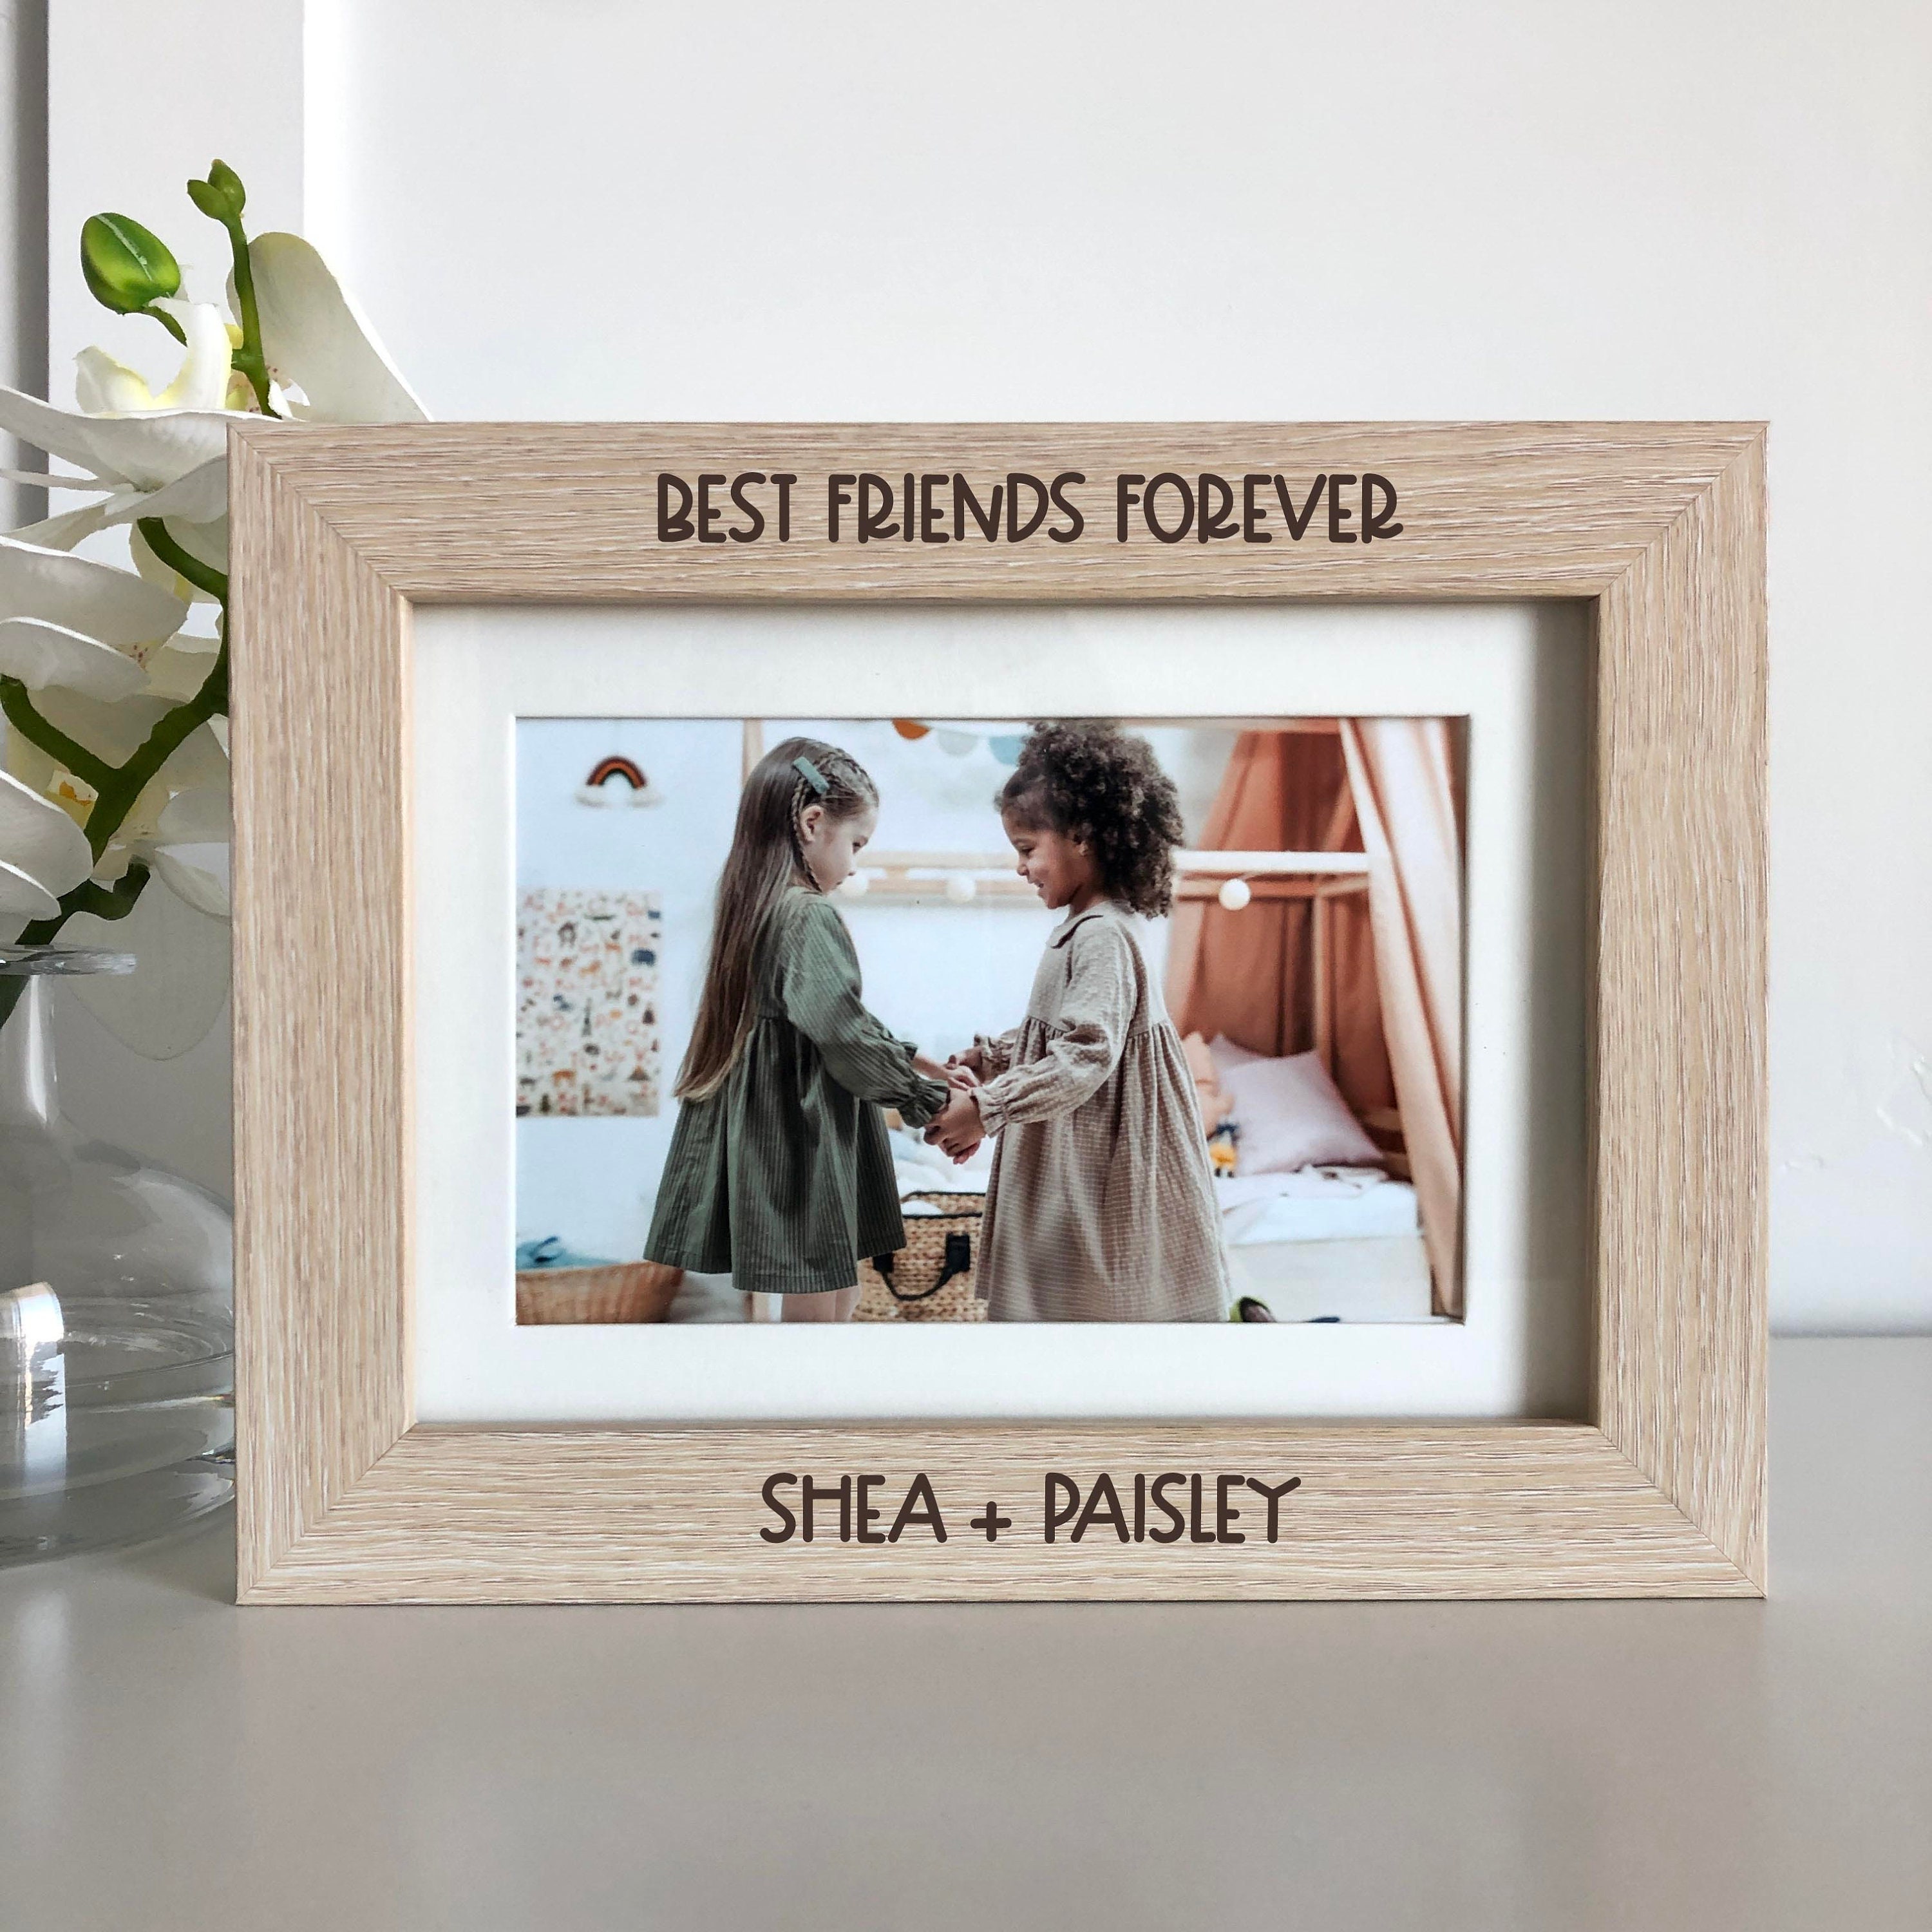 Best Friends philoSophie's Personalized Shiplap Picture Frames